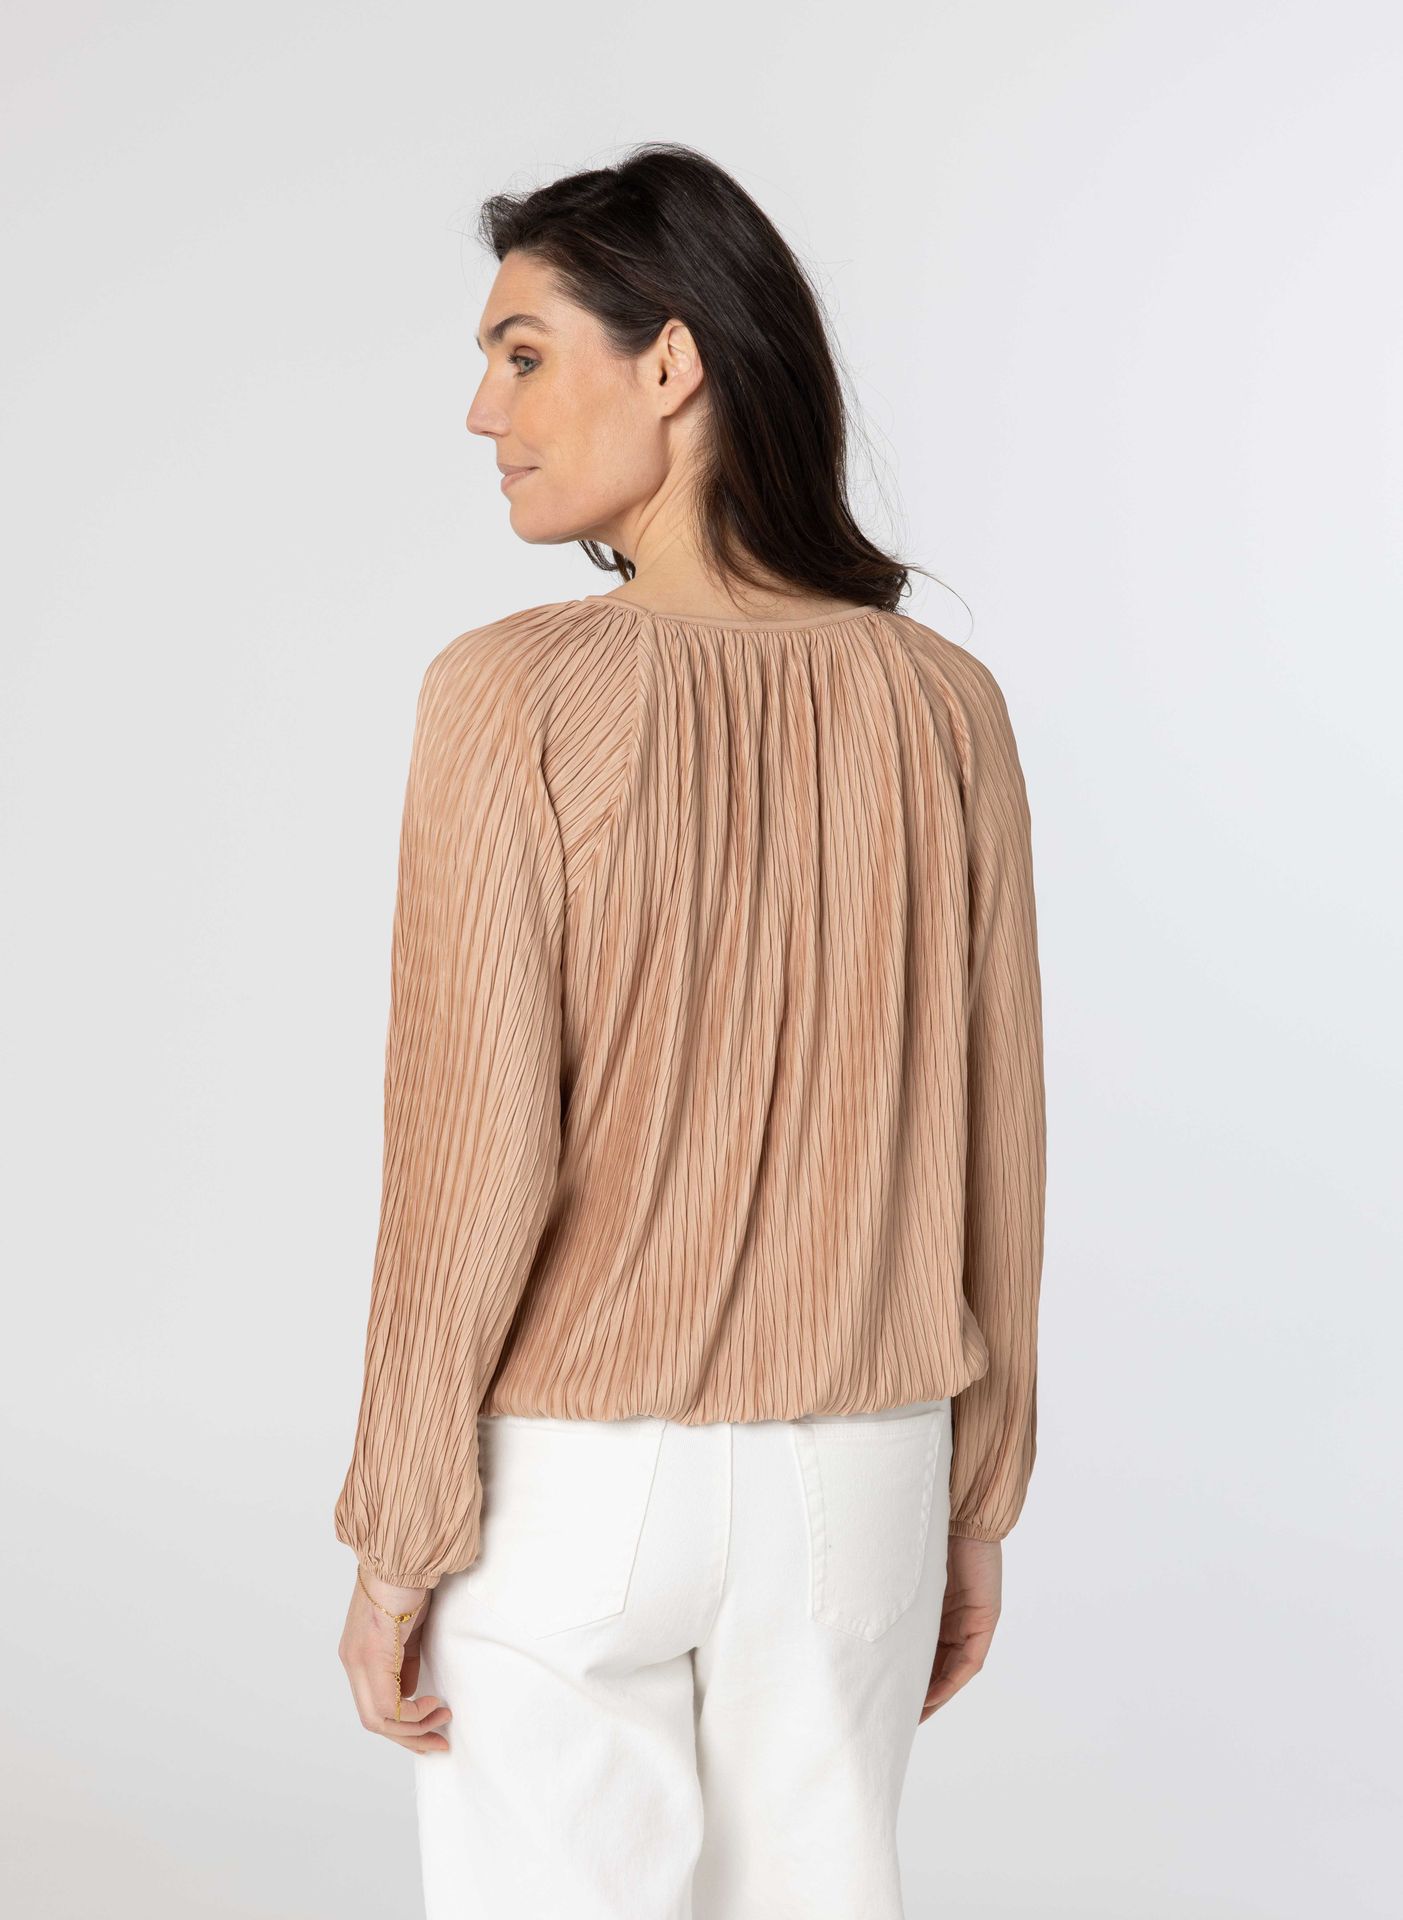 Norah Lichtbruine blouse light brown 214259-201